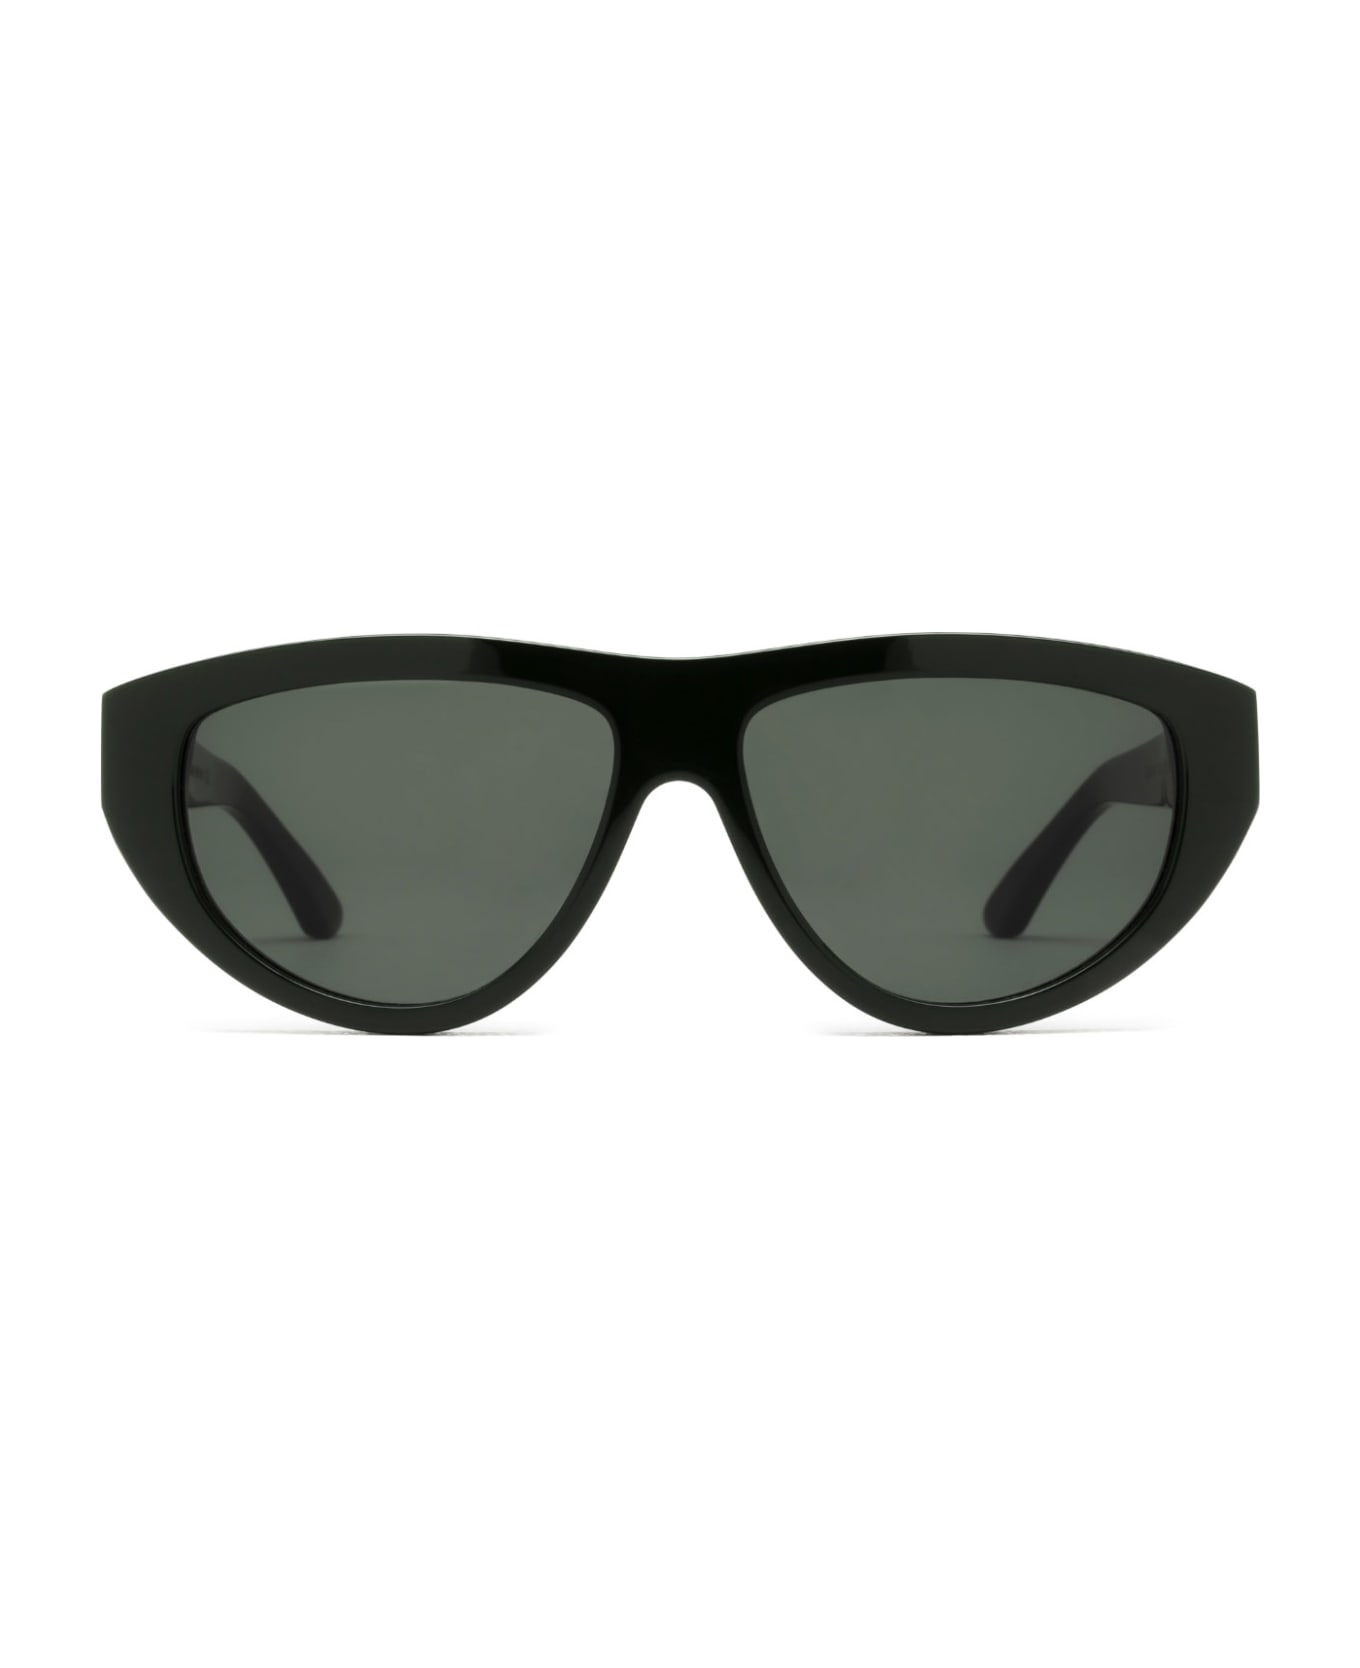 Huma Viko Green Sunglasses - Green